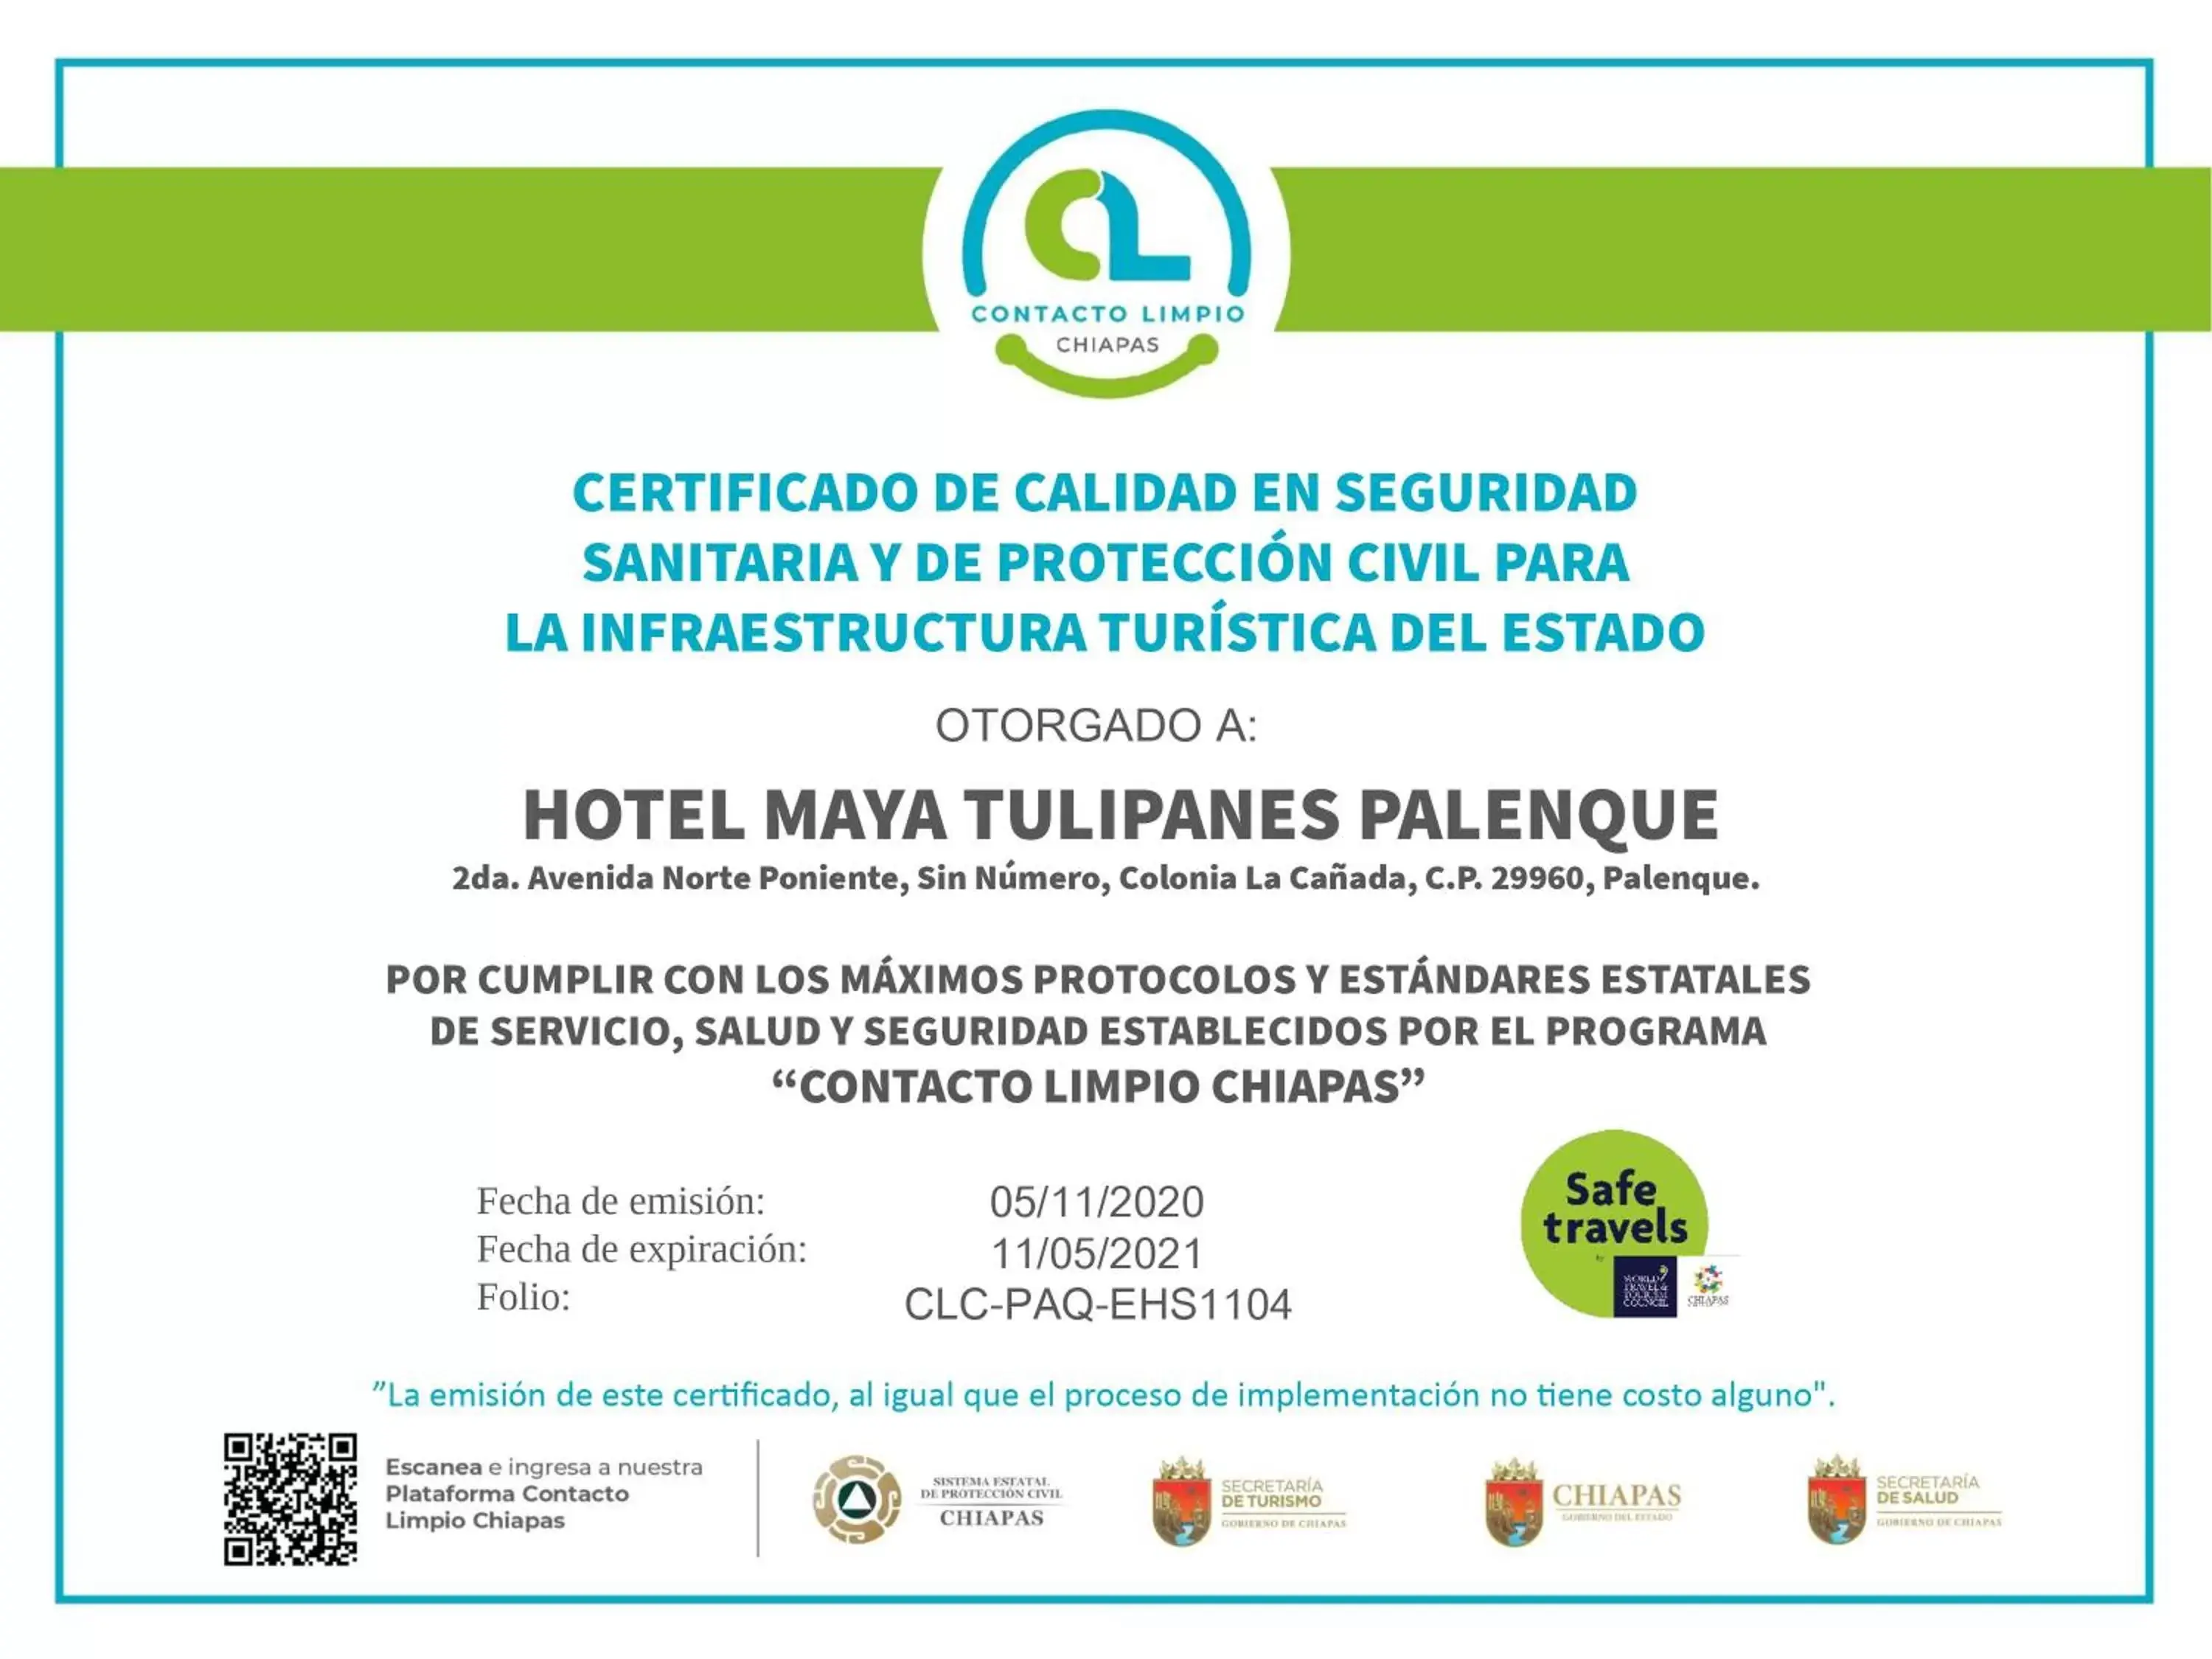 Logo/Certificate/Sign in Hotel Maya Tulipanes Palenque